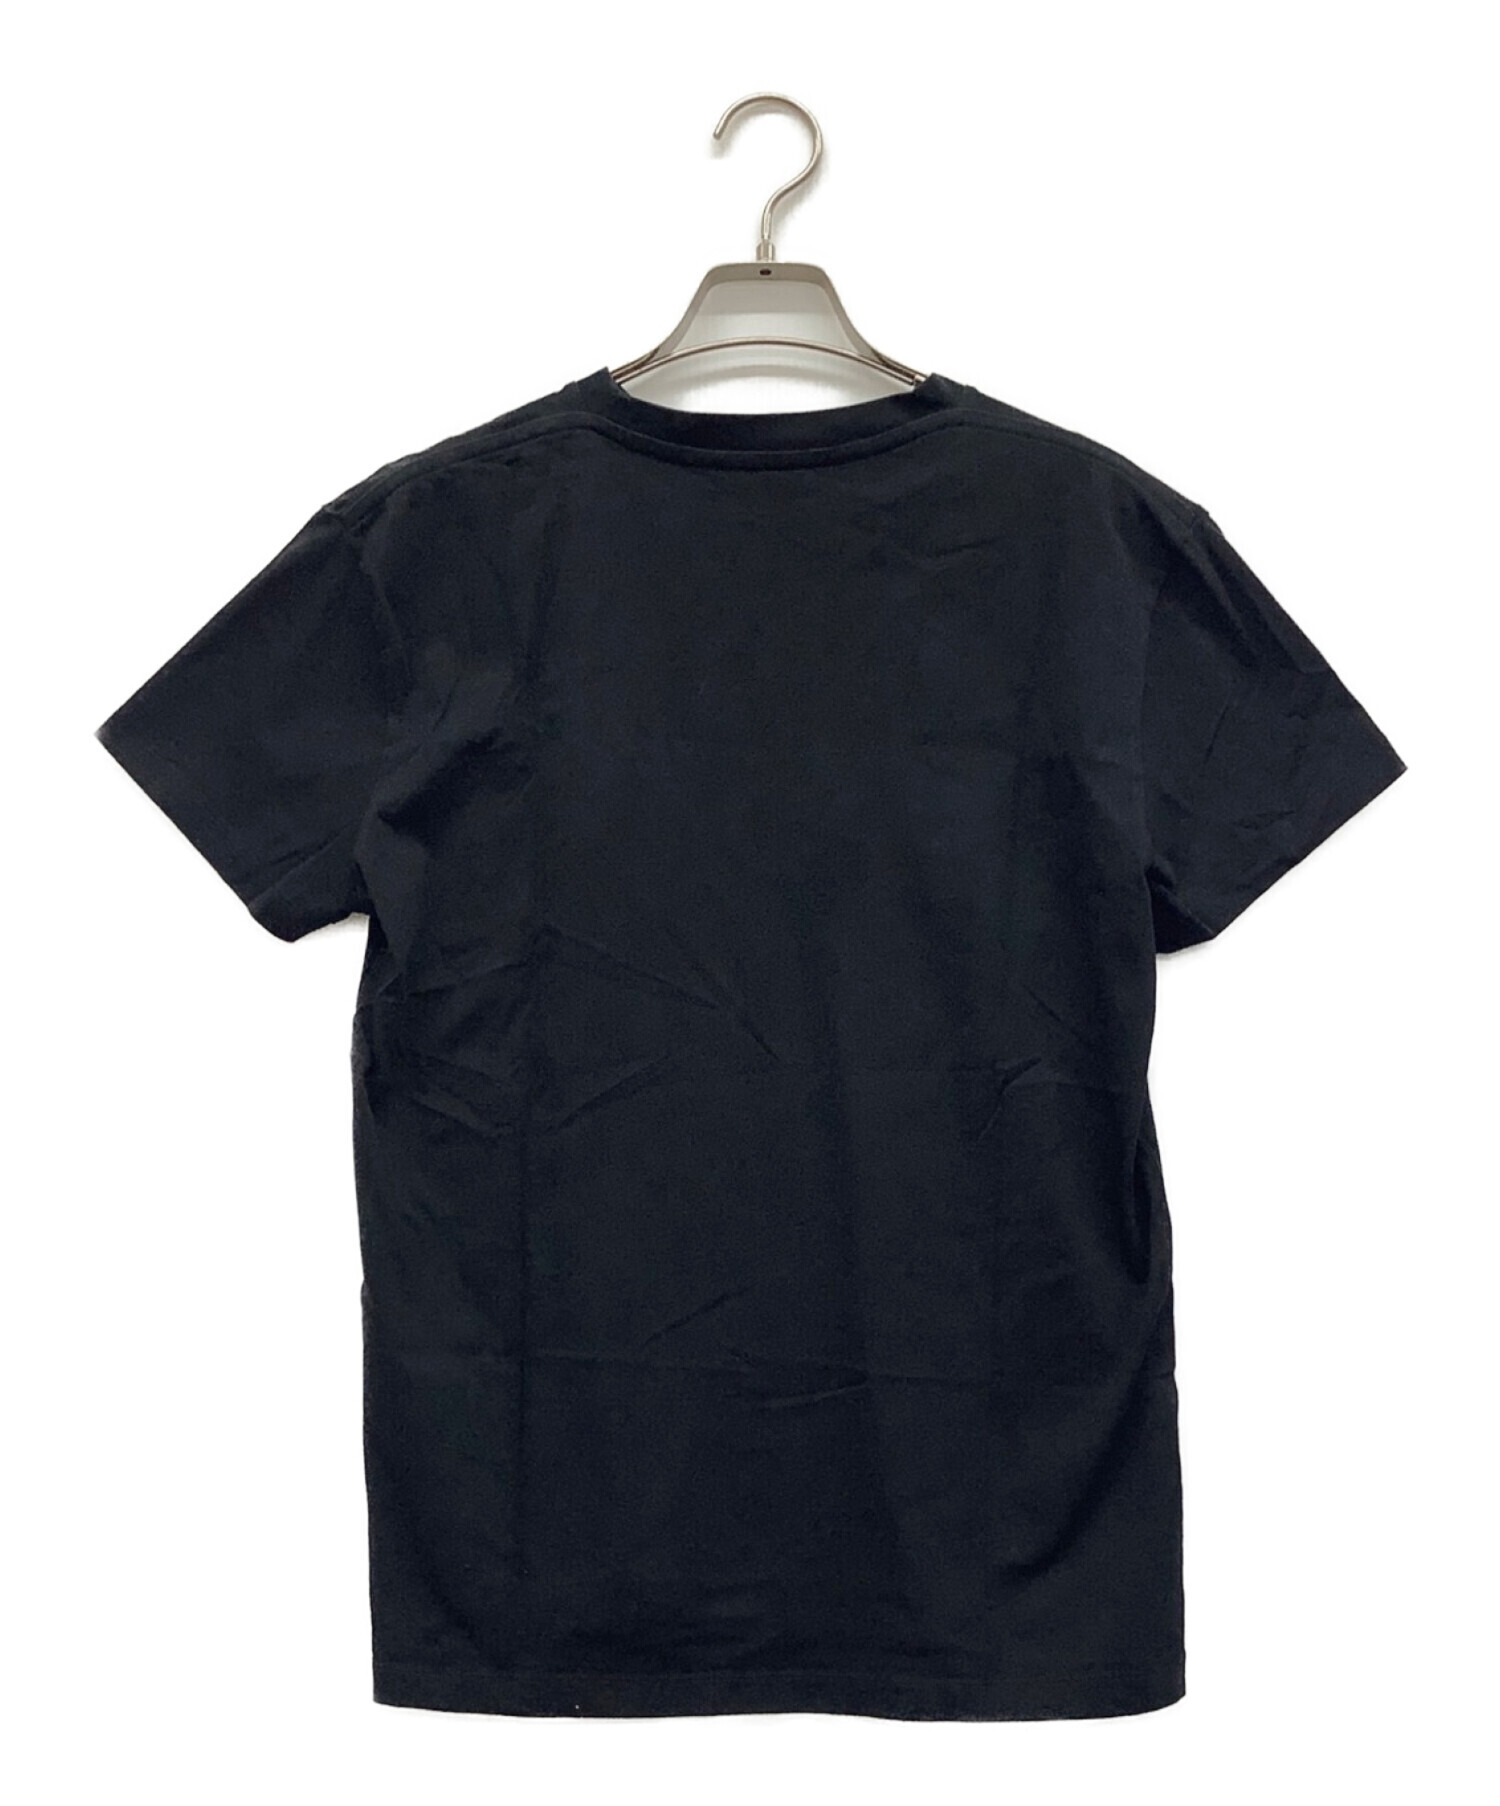 CELINE (セリーヌ) ペインティングロゴTシャツ ブラック サイズ:XS